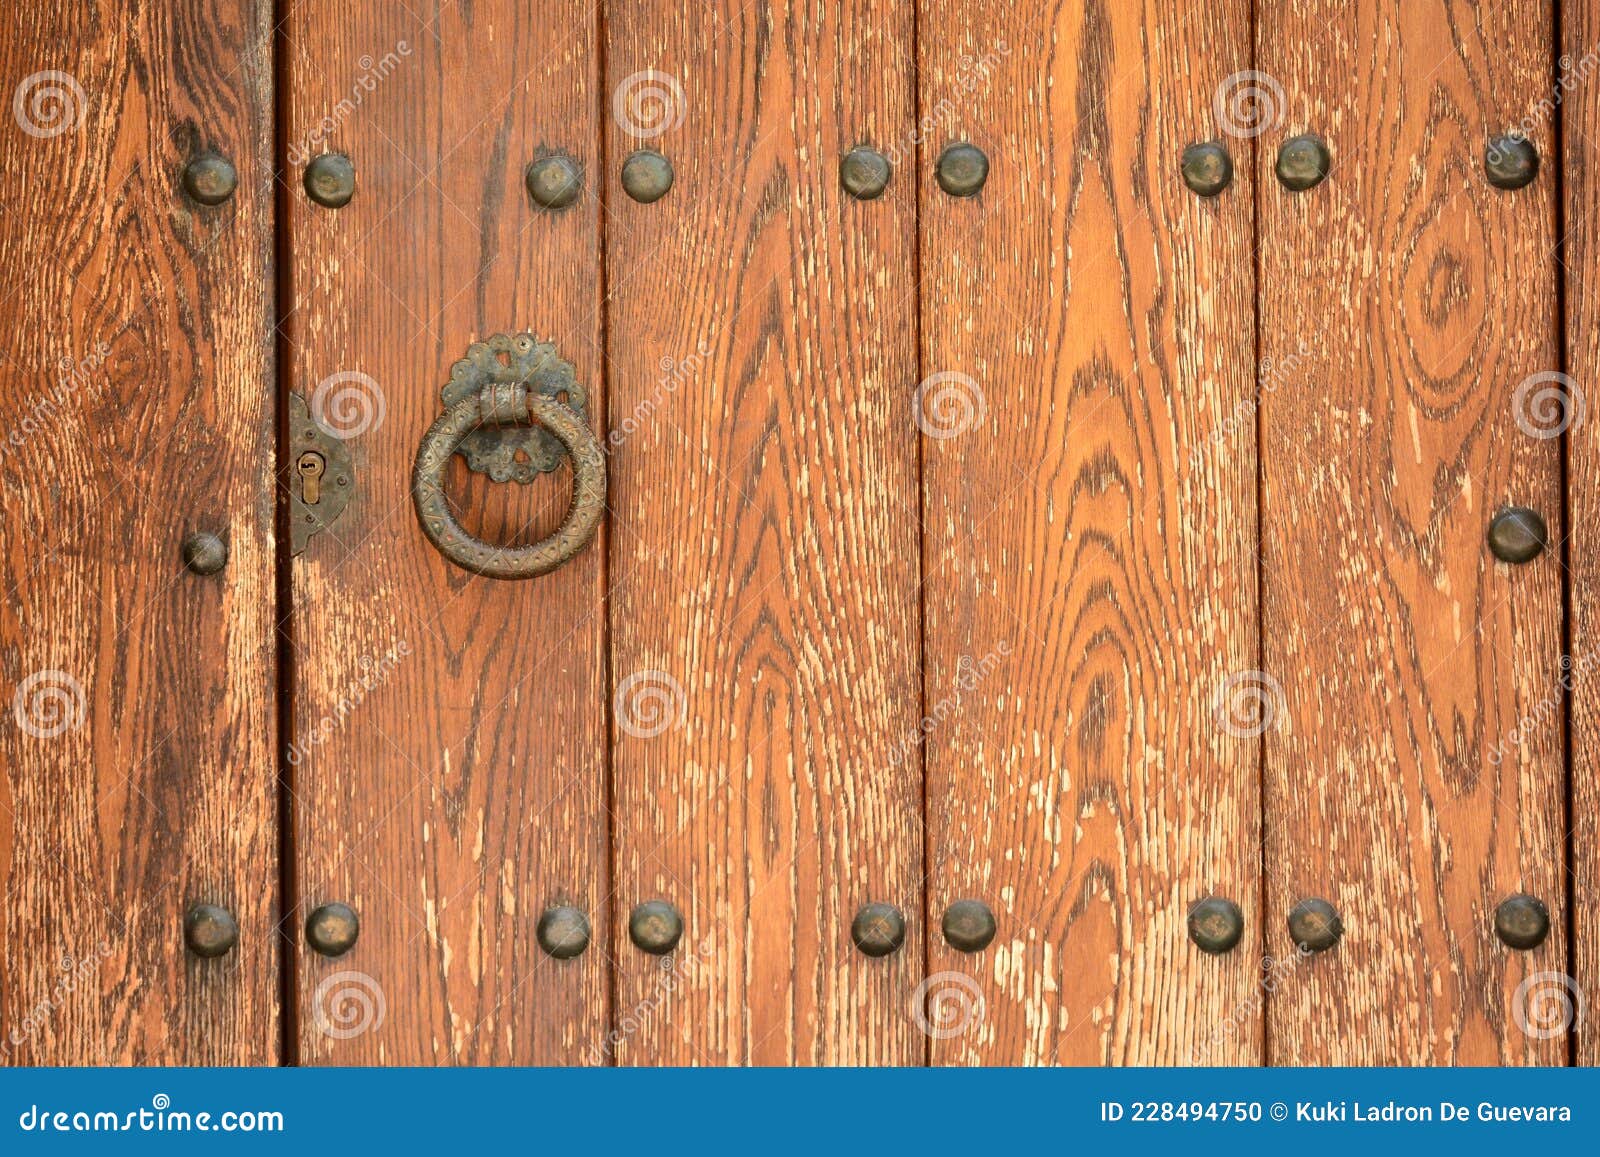 detail of a wooden door with knocker